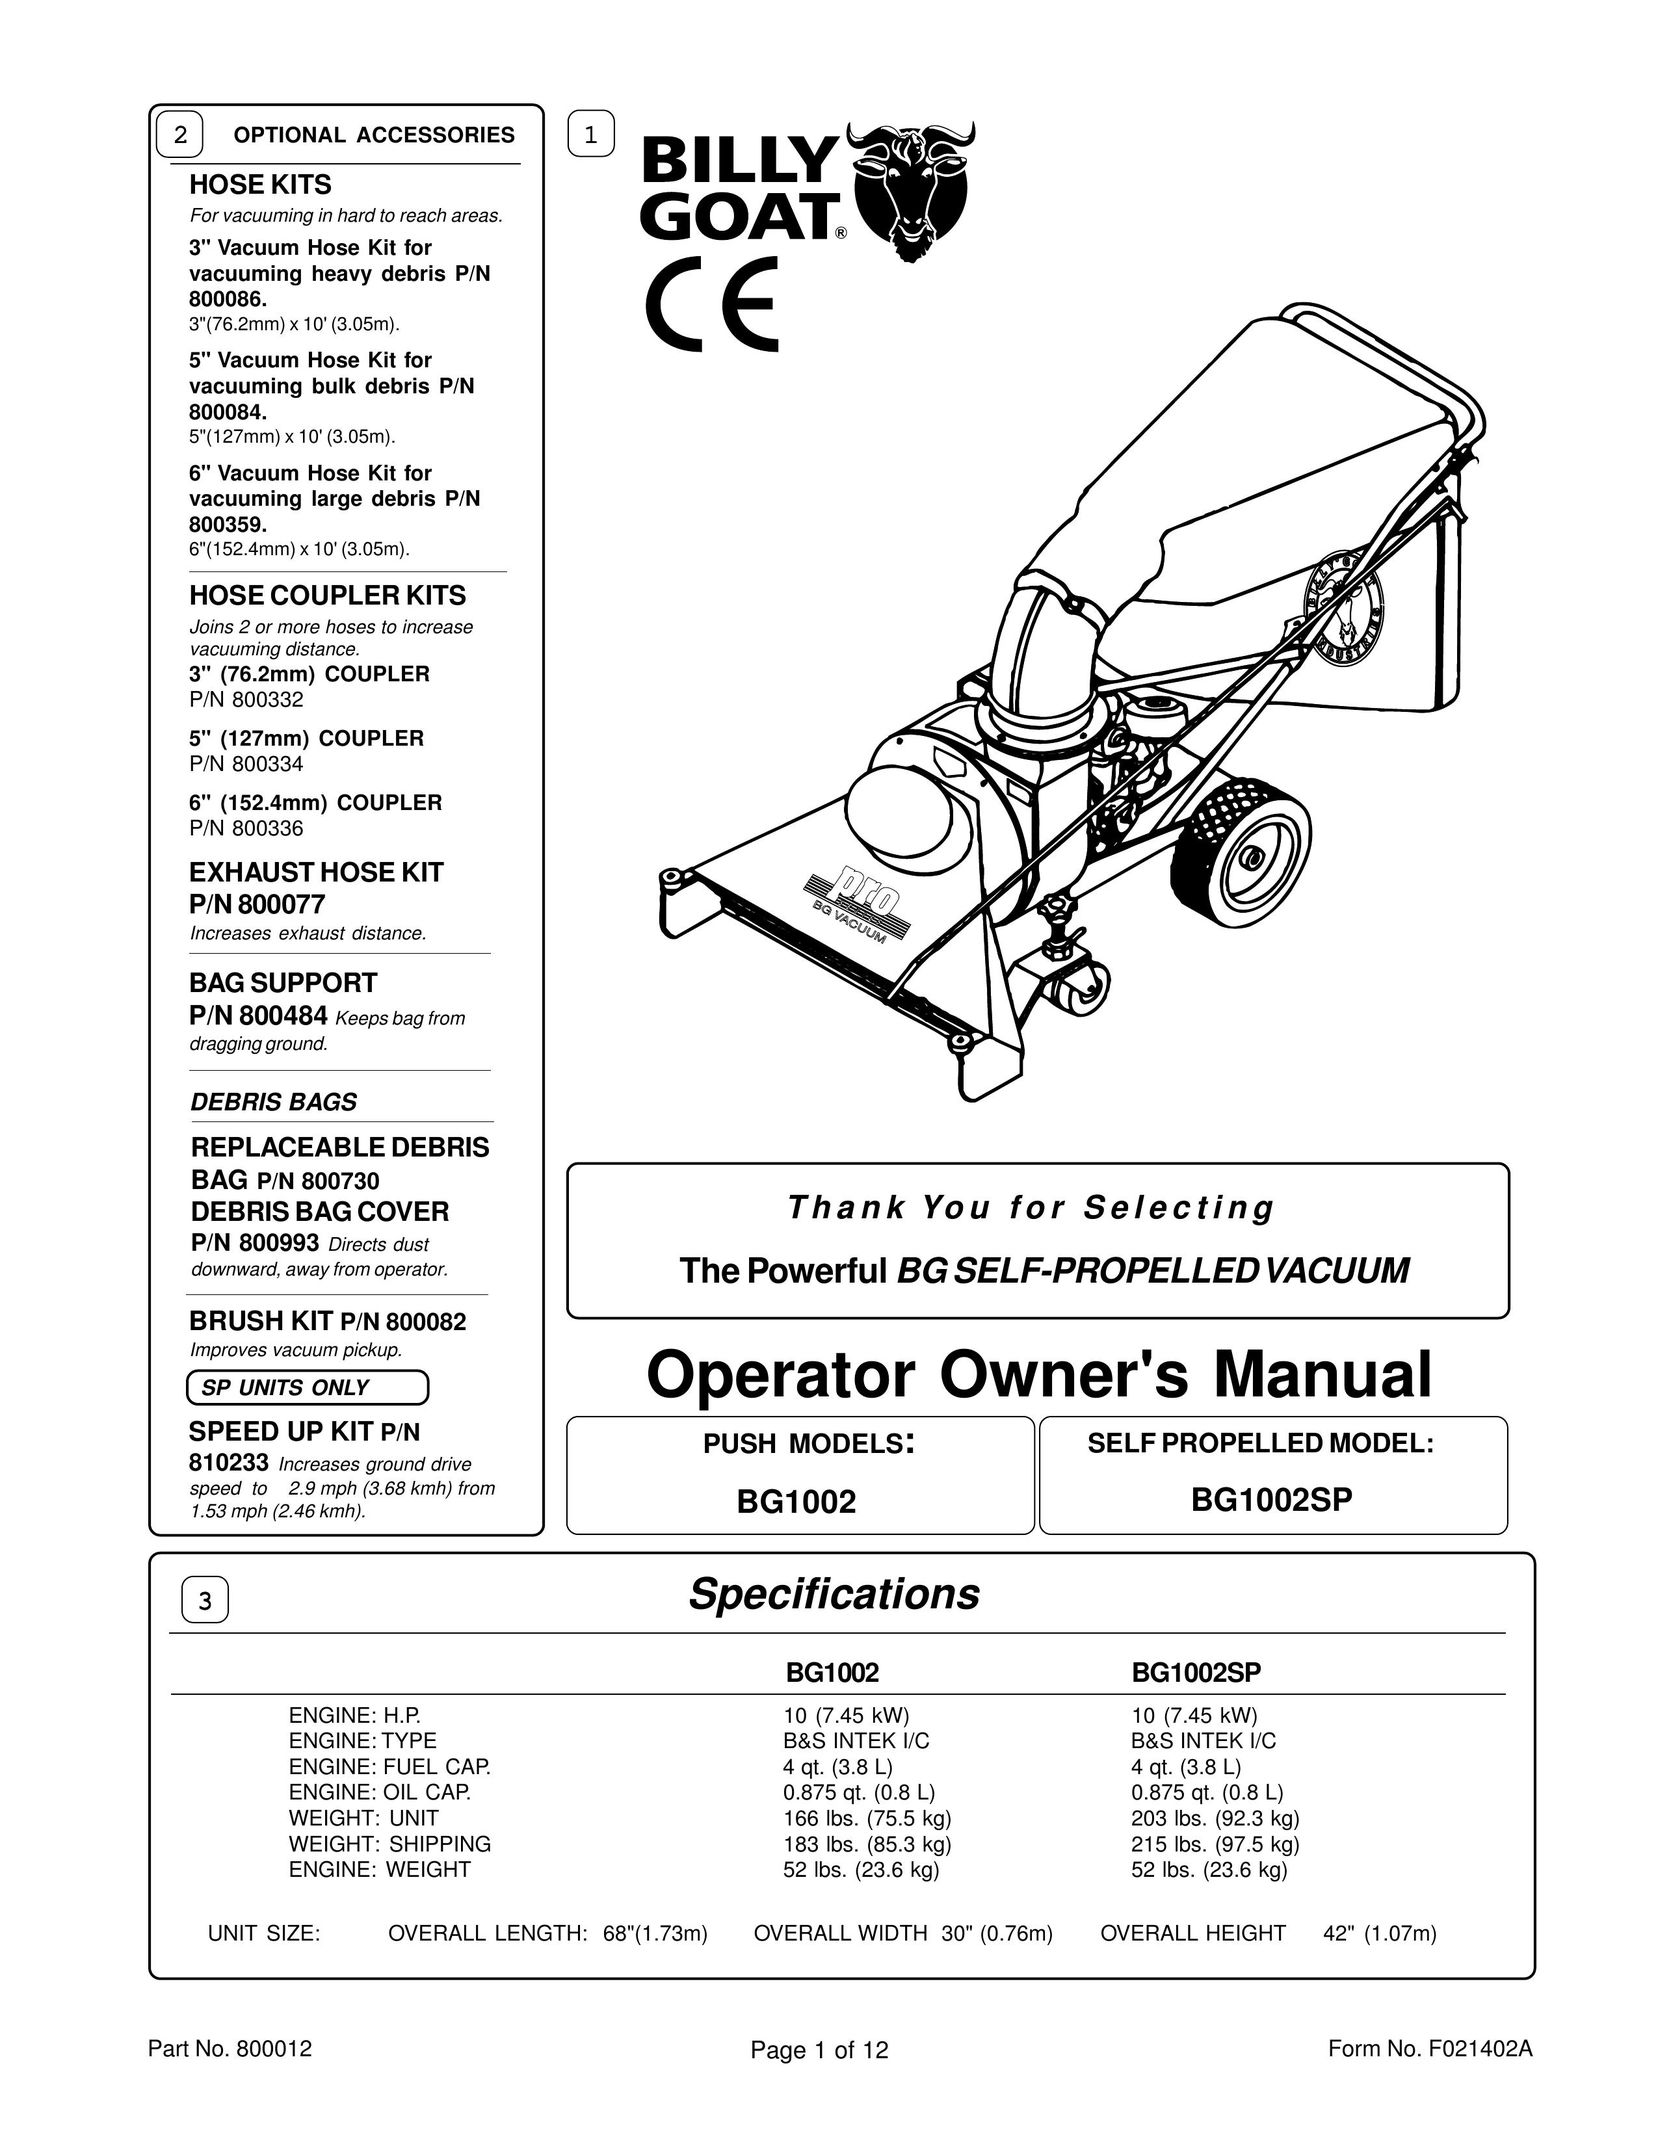 Billy Goat BG1002 Vacuum Cleaner User Manual